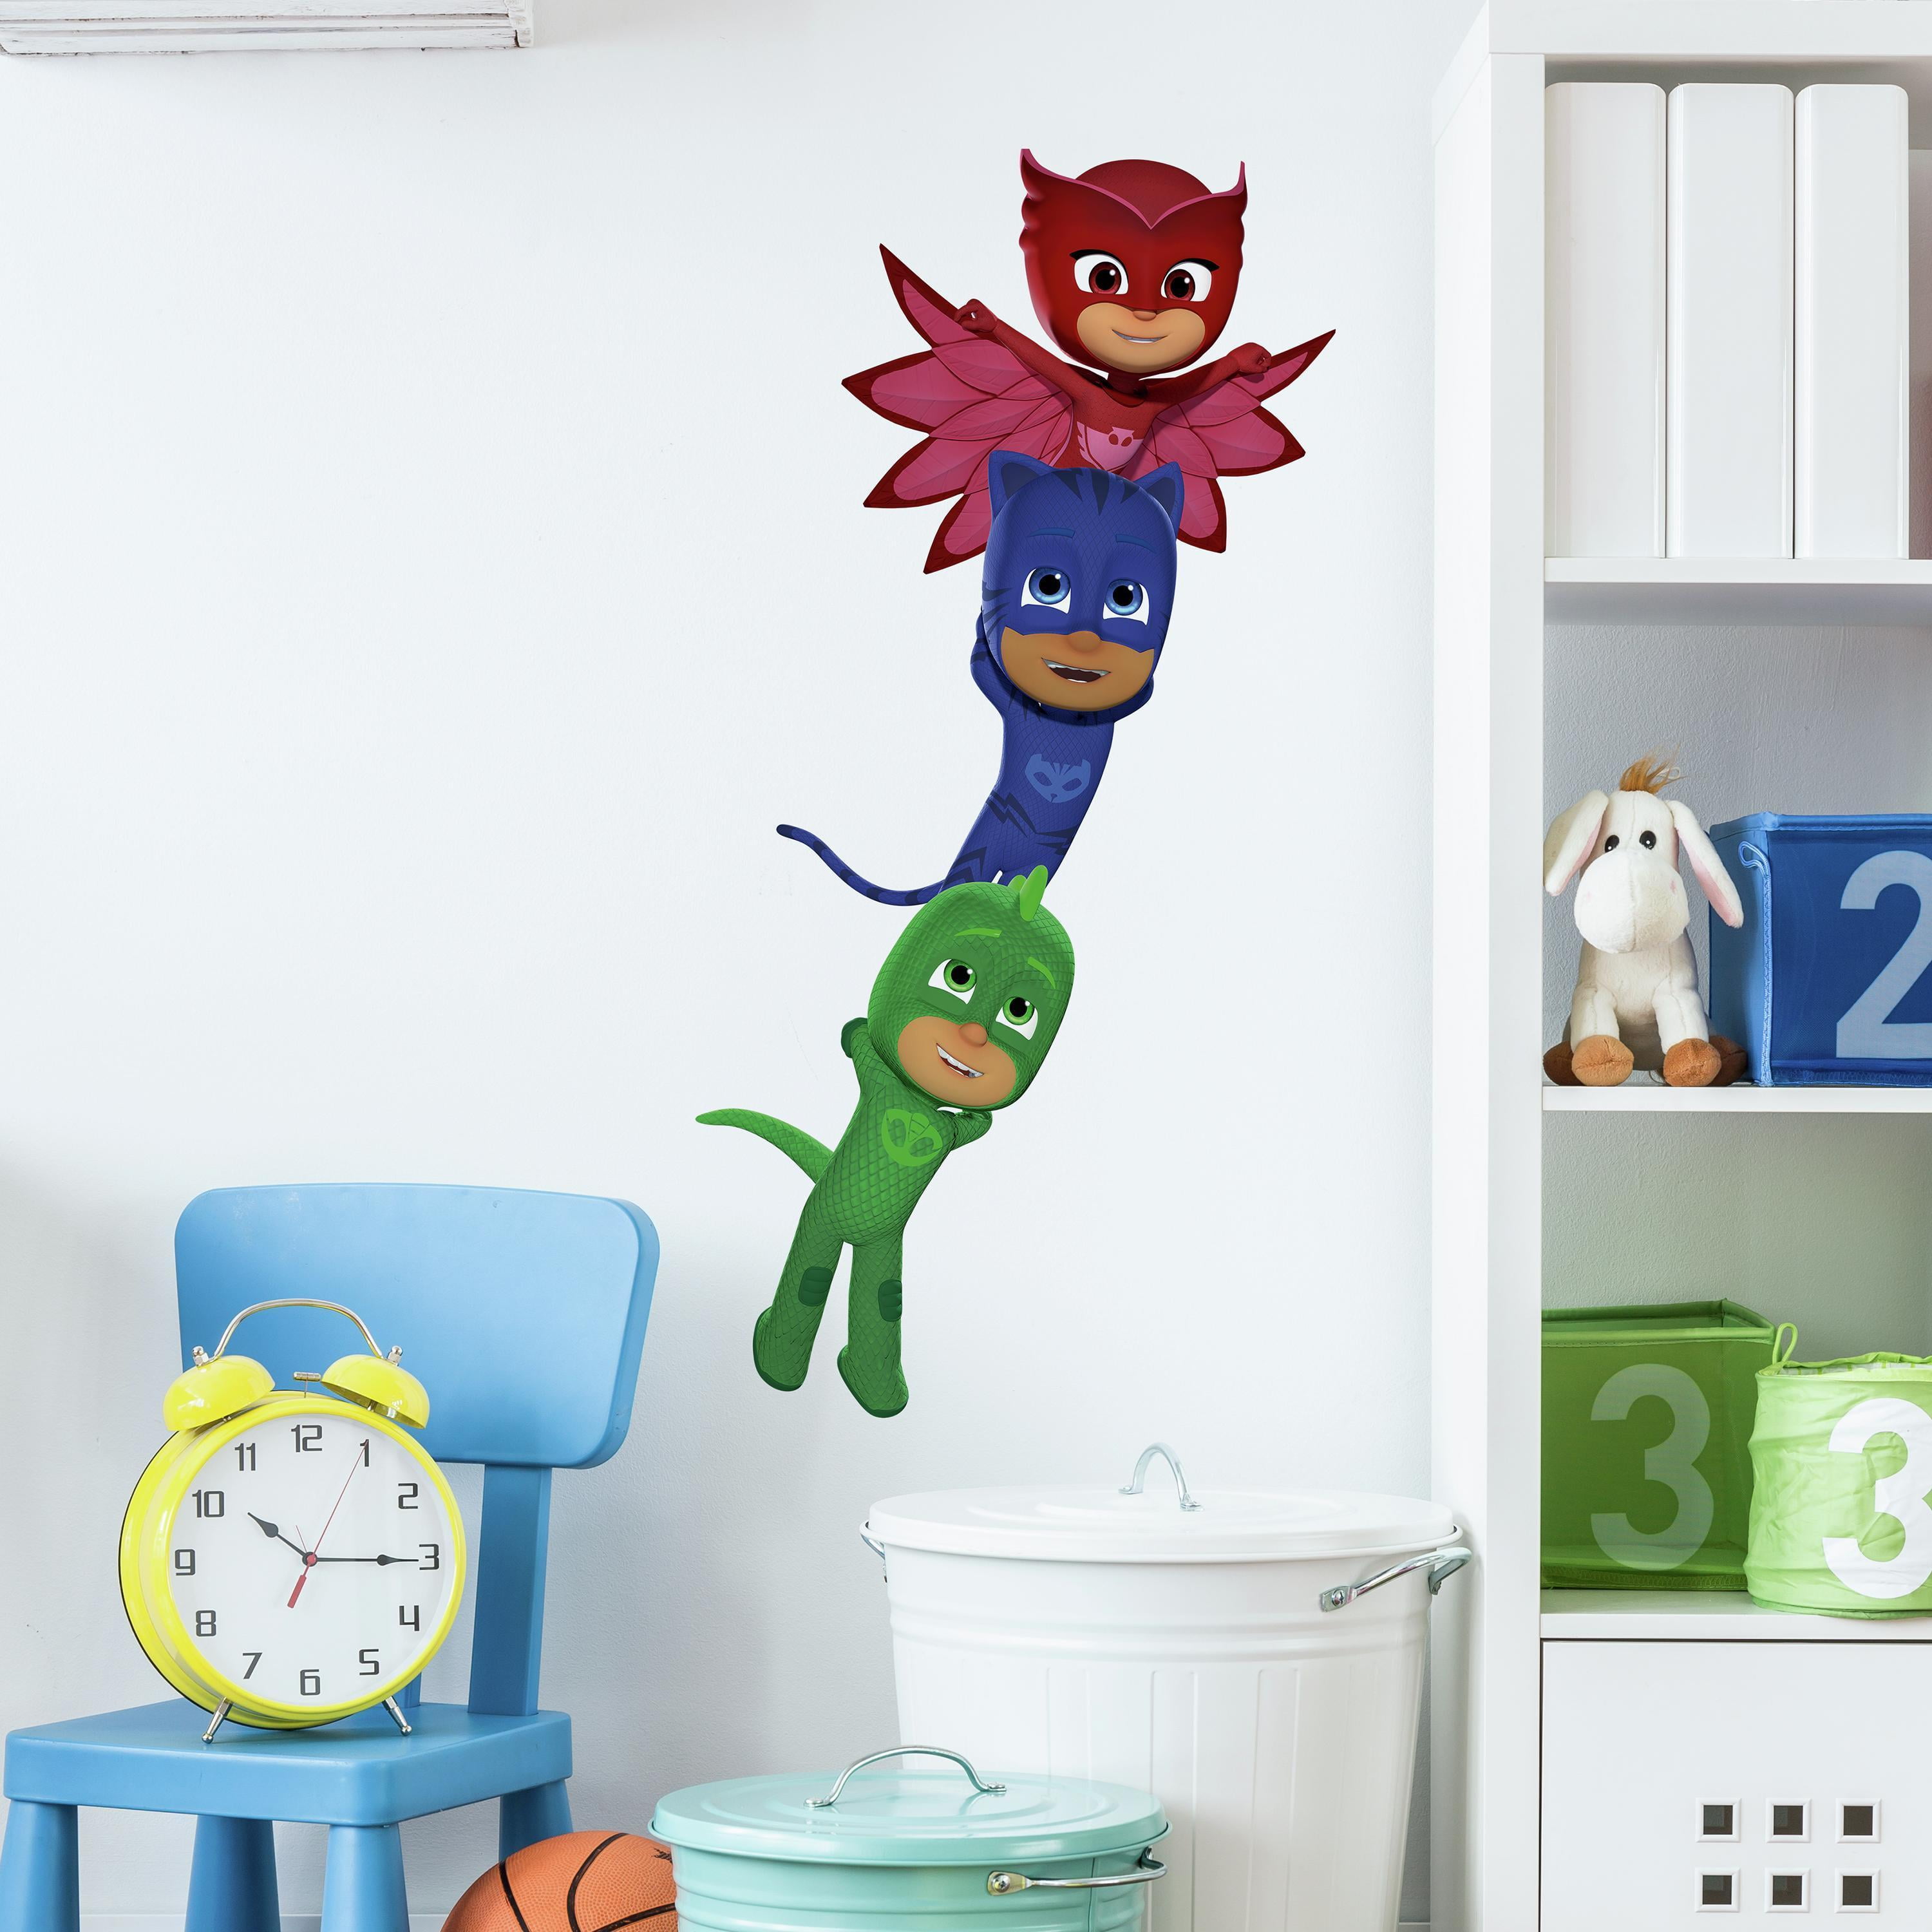 12 x 20 Removable Home Disney Animated Kids TV Series Decor Design Kids Bedroom Nursery Sticker Decoration PJ Masks Vinyl Wall Art Decal Catboy and Owlette